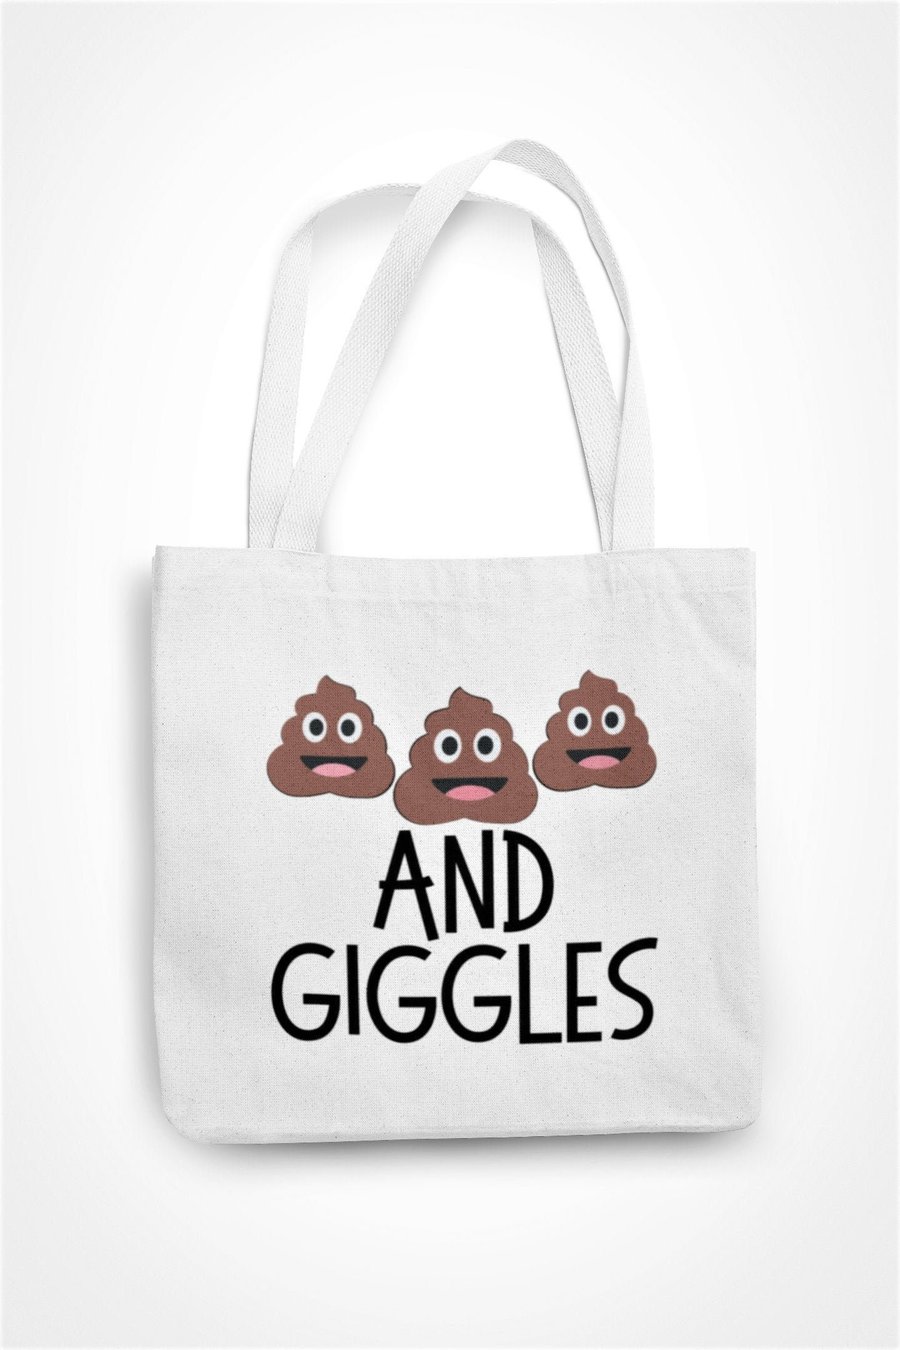 Poo And Giggles Tote Bag Poo Face Emoji Funny Novelty Gift Joke Present 